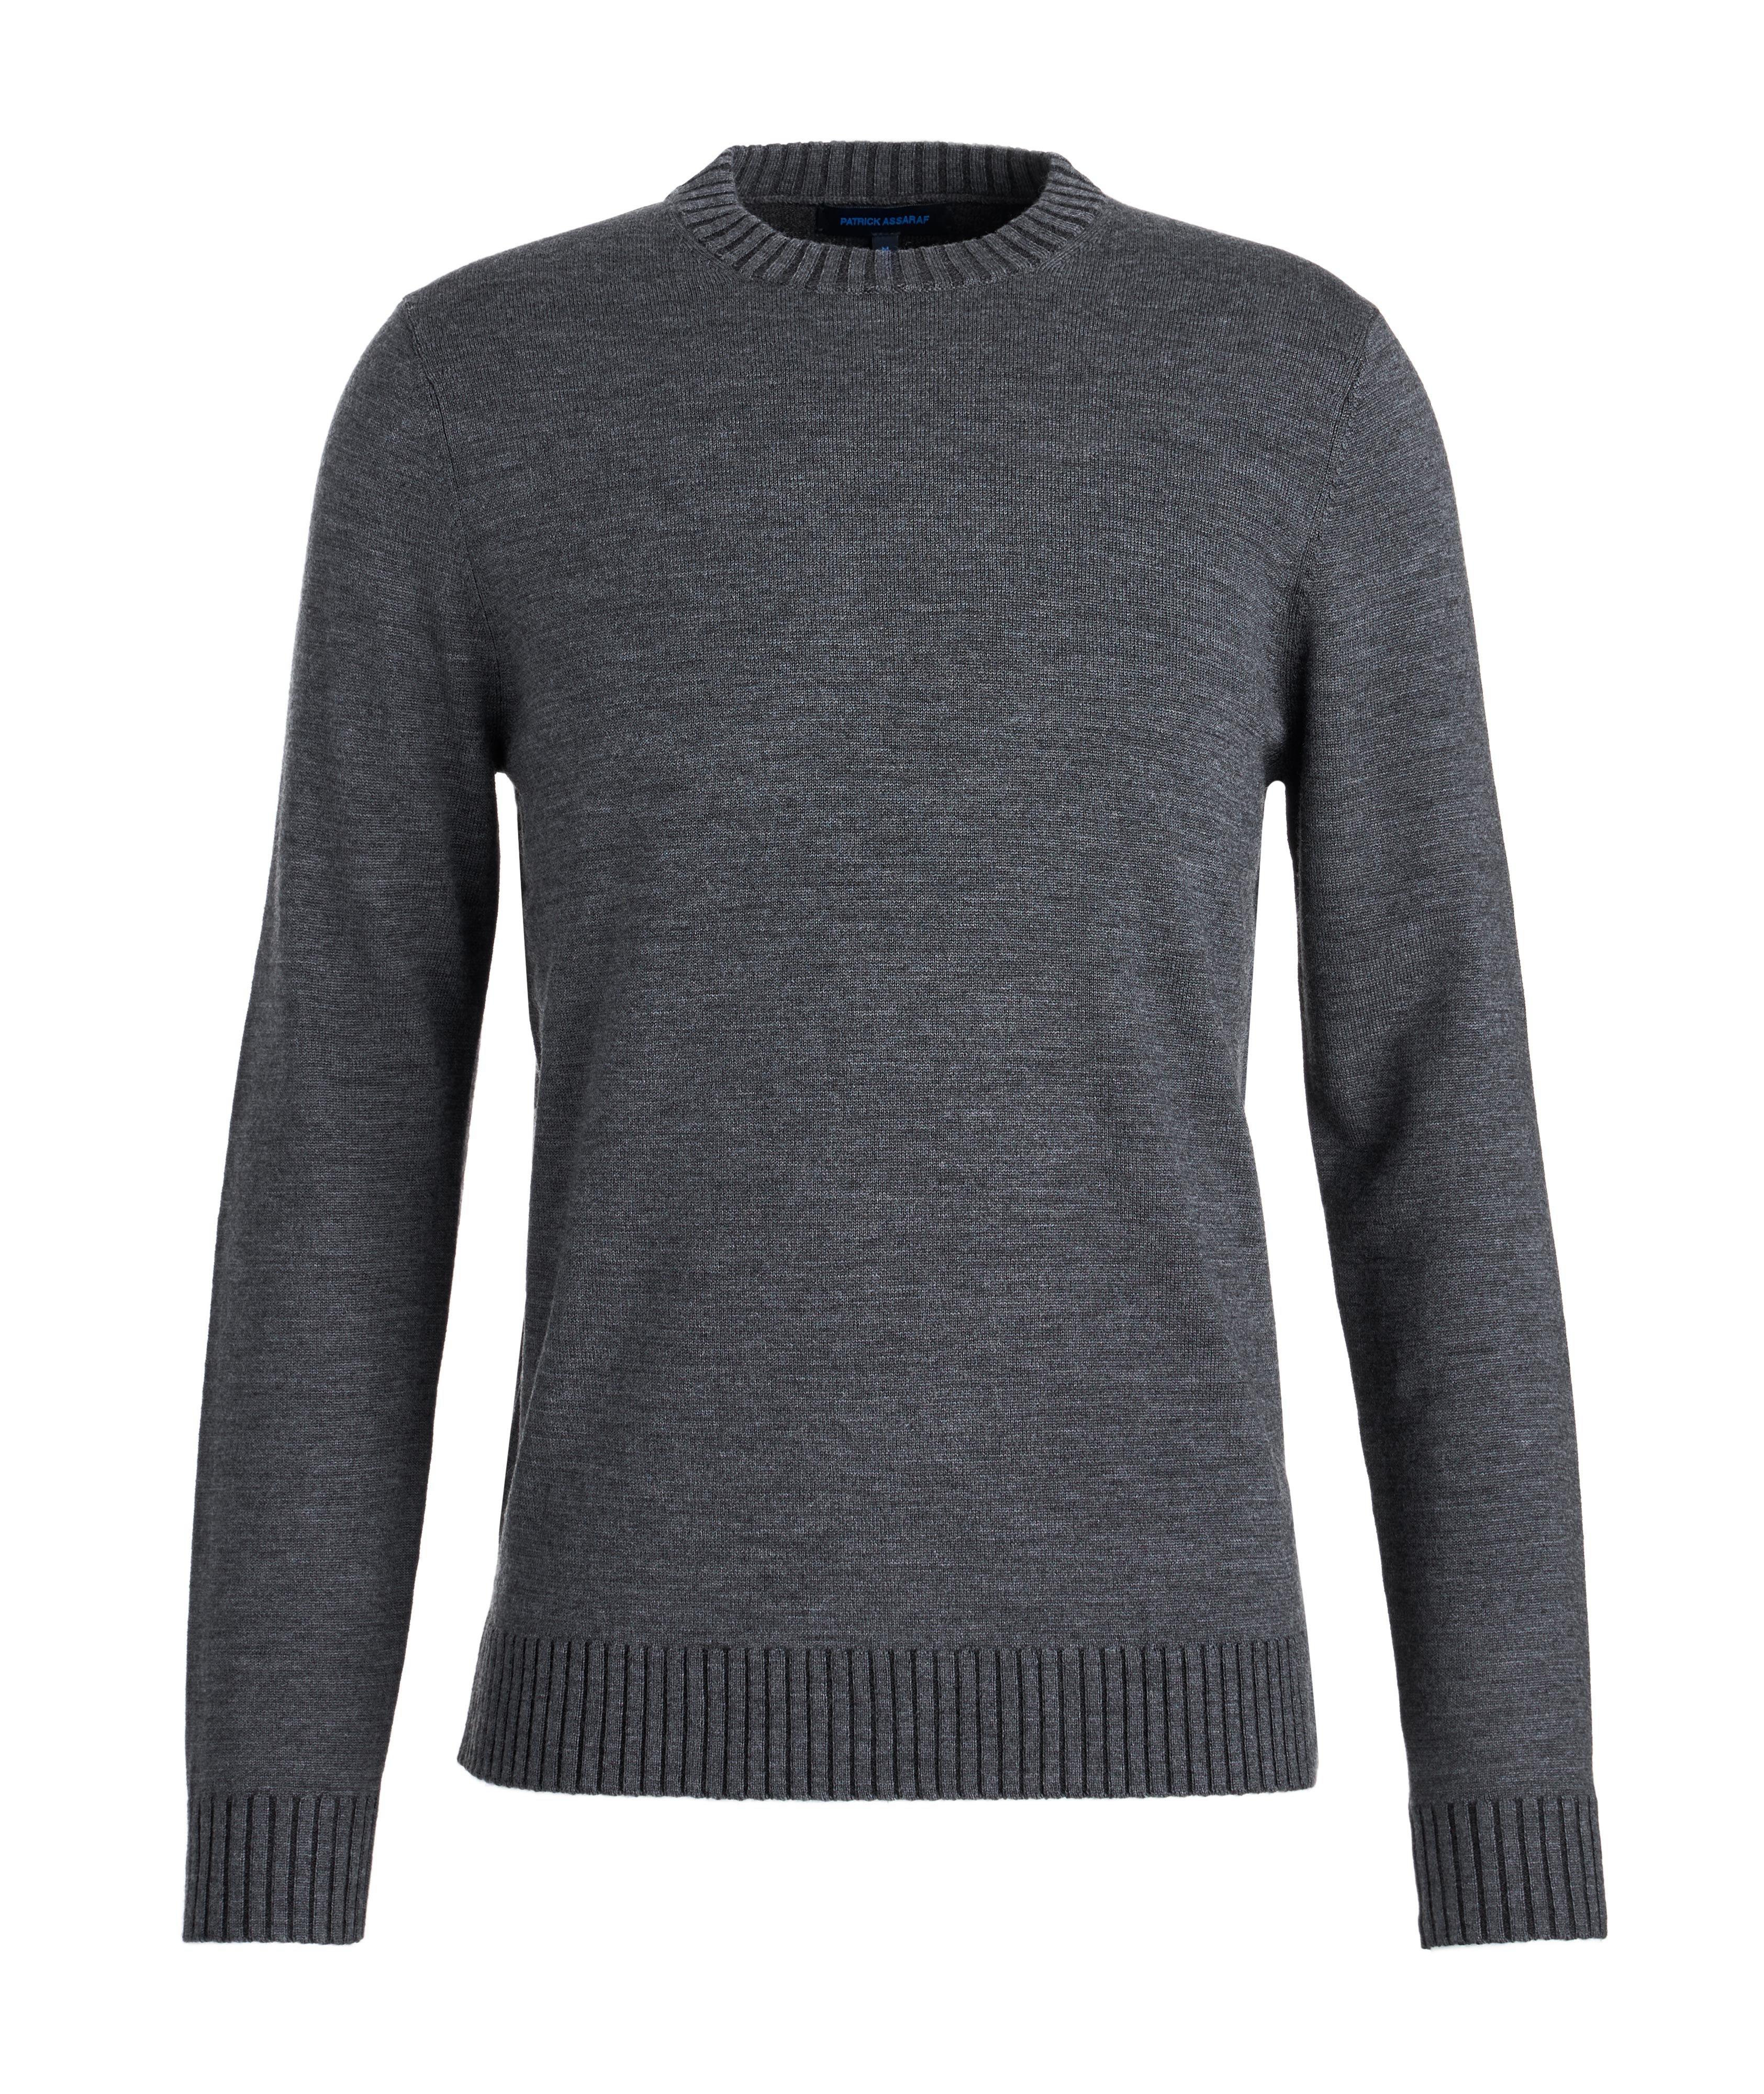 Patrick Assaraf Extra-Fine Merino Wool Crew Neck Sweater | Sweaters ...